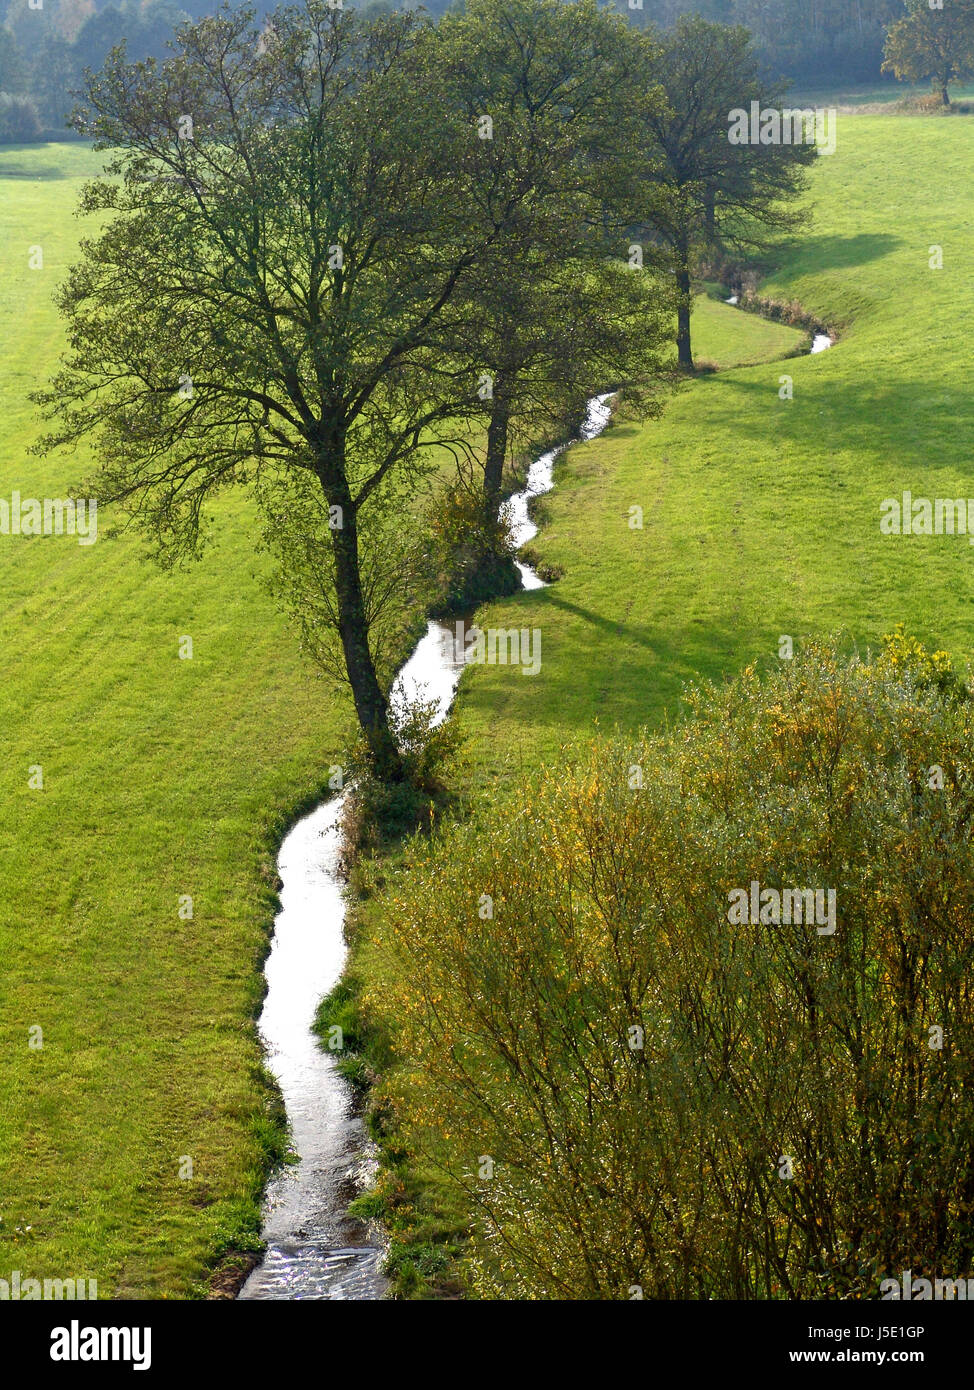 Baum Bäume grünen Romantik Radio stille Ruhe Stille Stream Frühling  Stockfotografie - Alamy